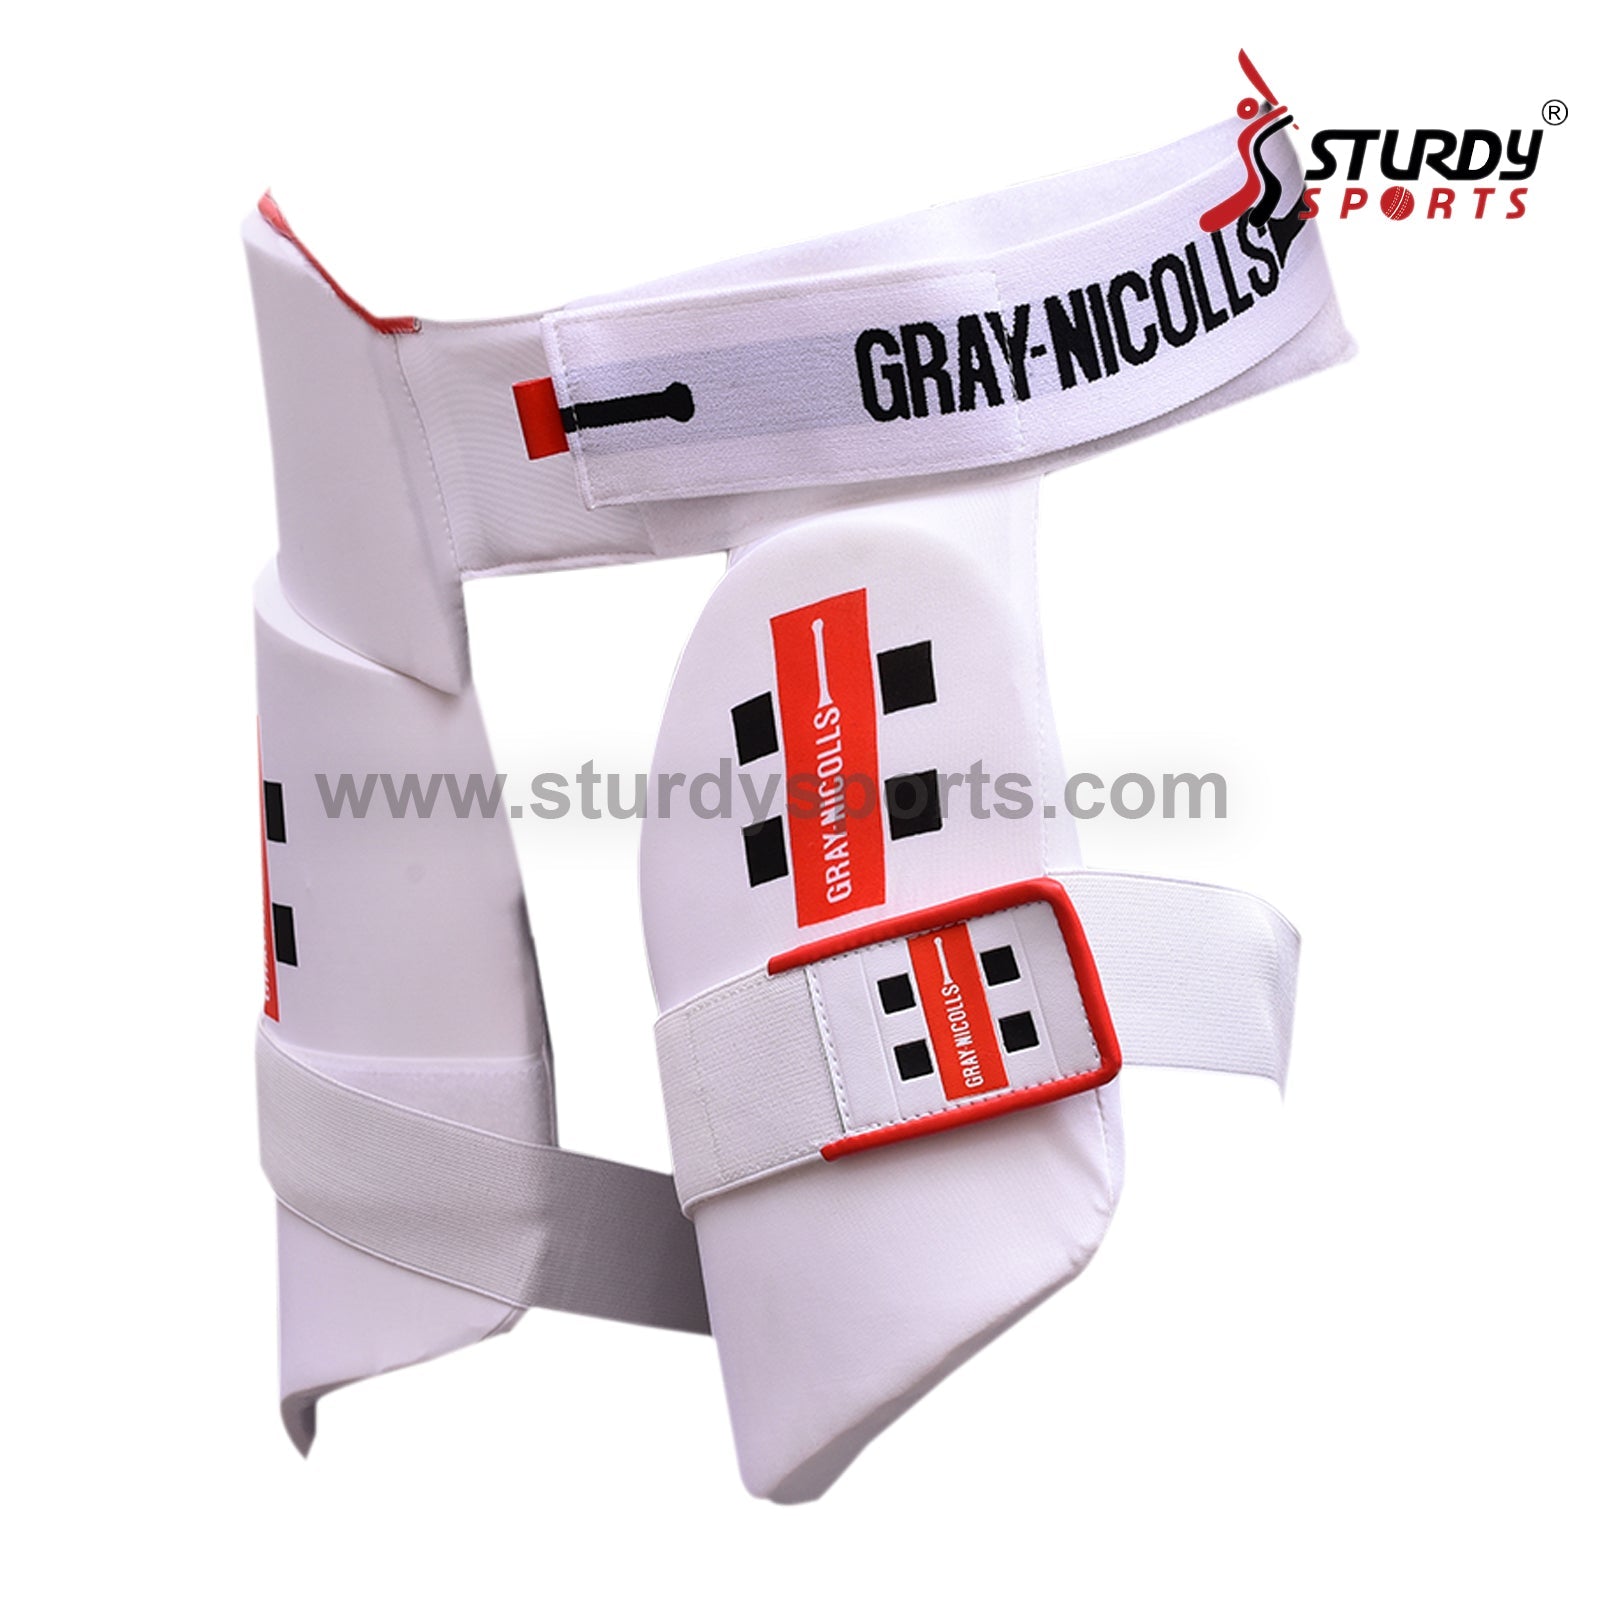 Gray Nicolls Test GN9 Combo Thigh Guard - Medium